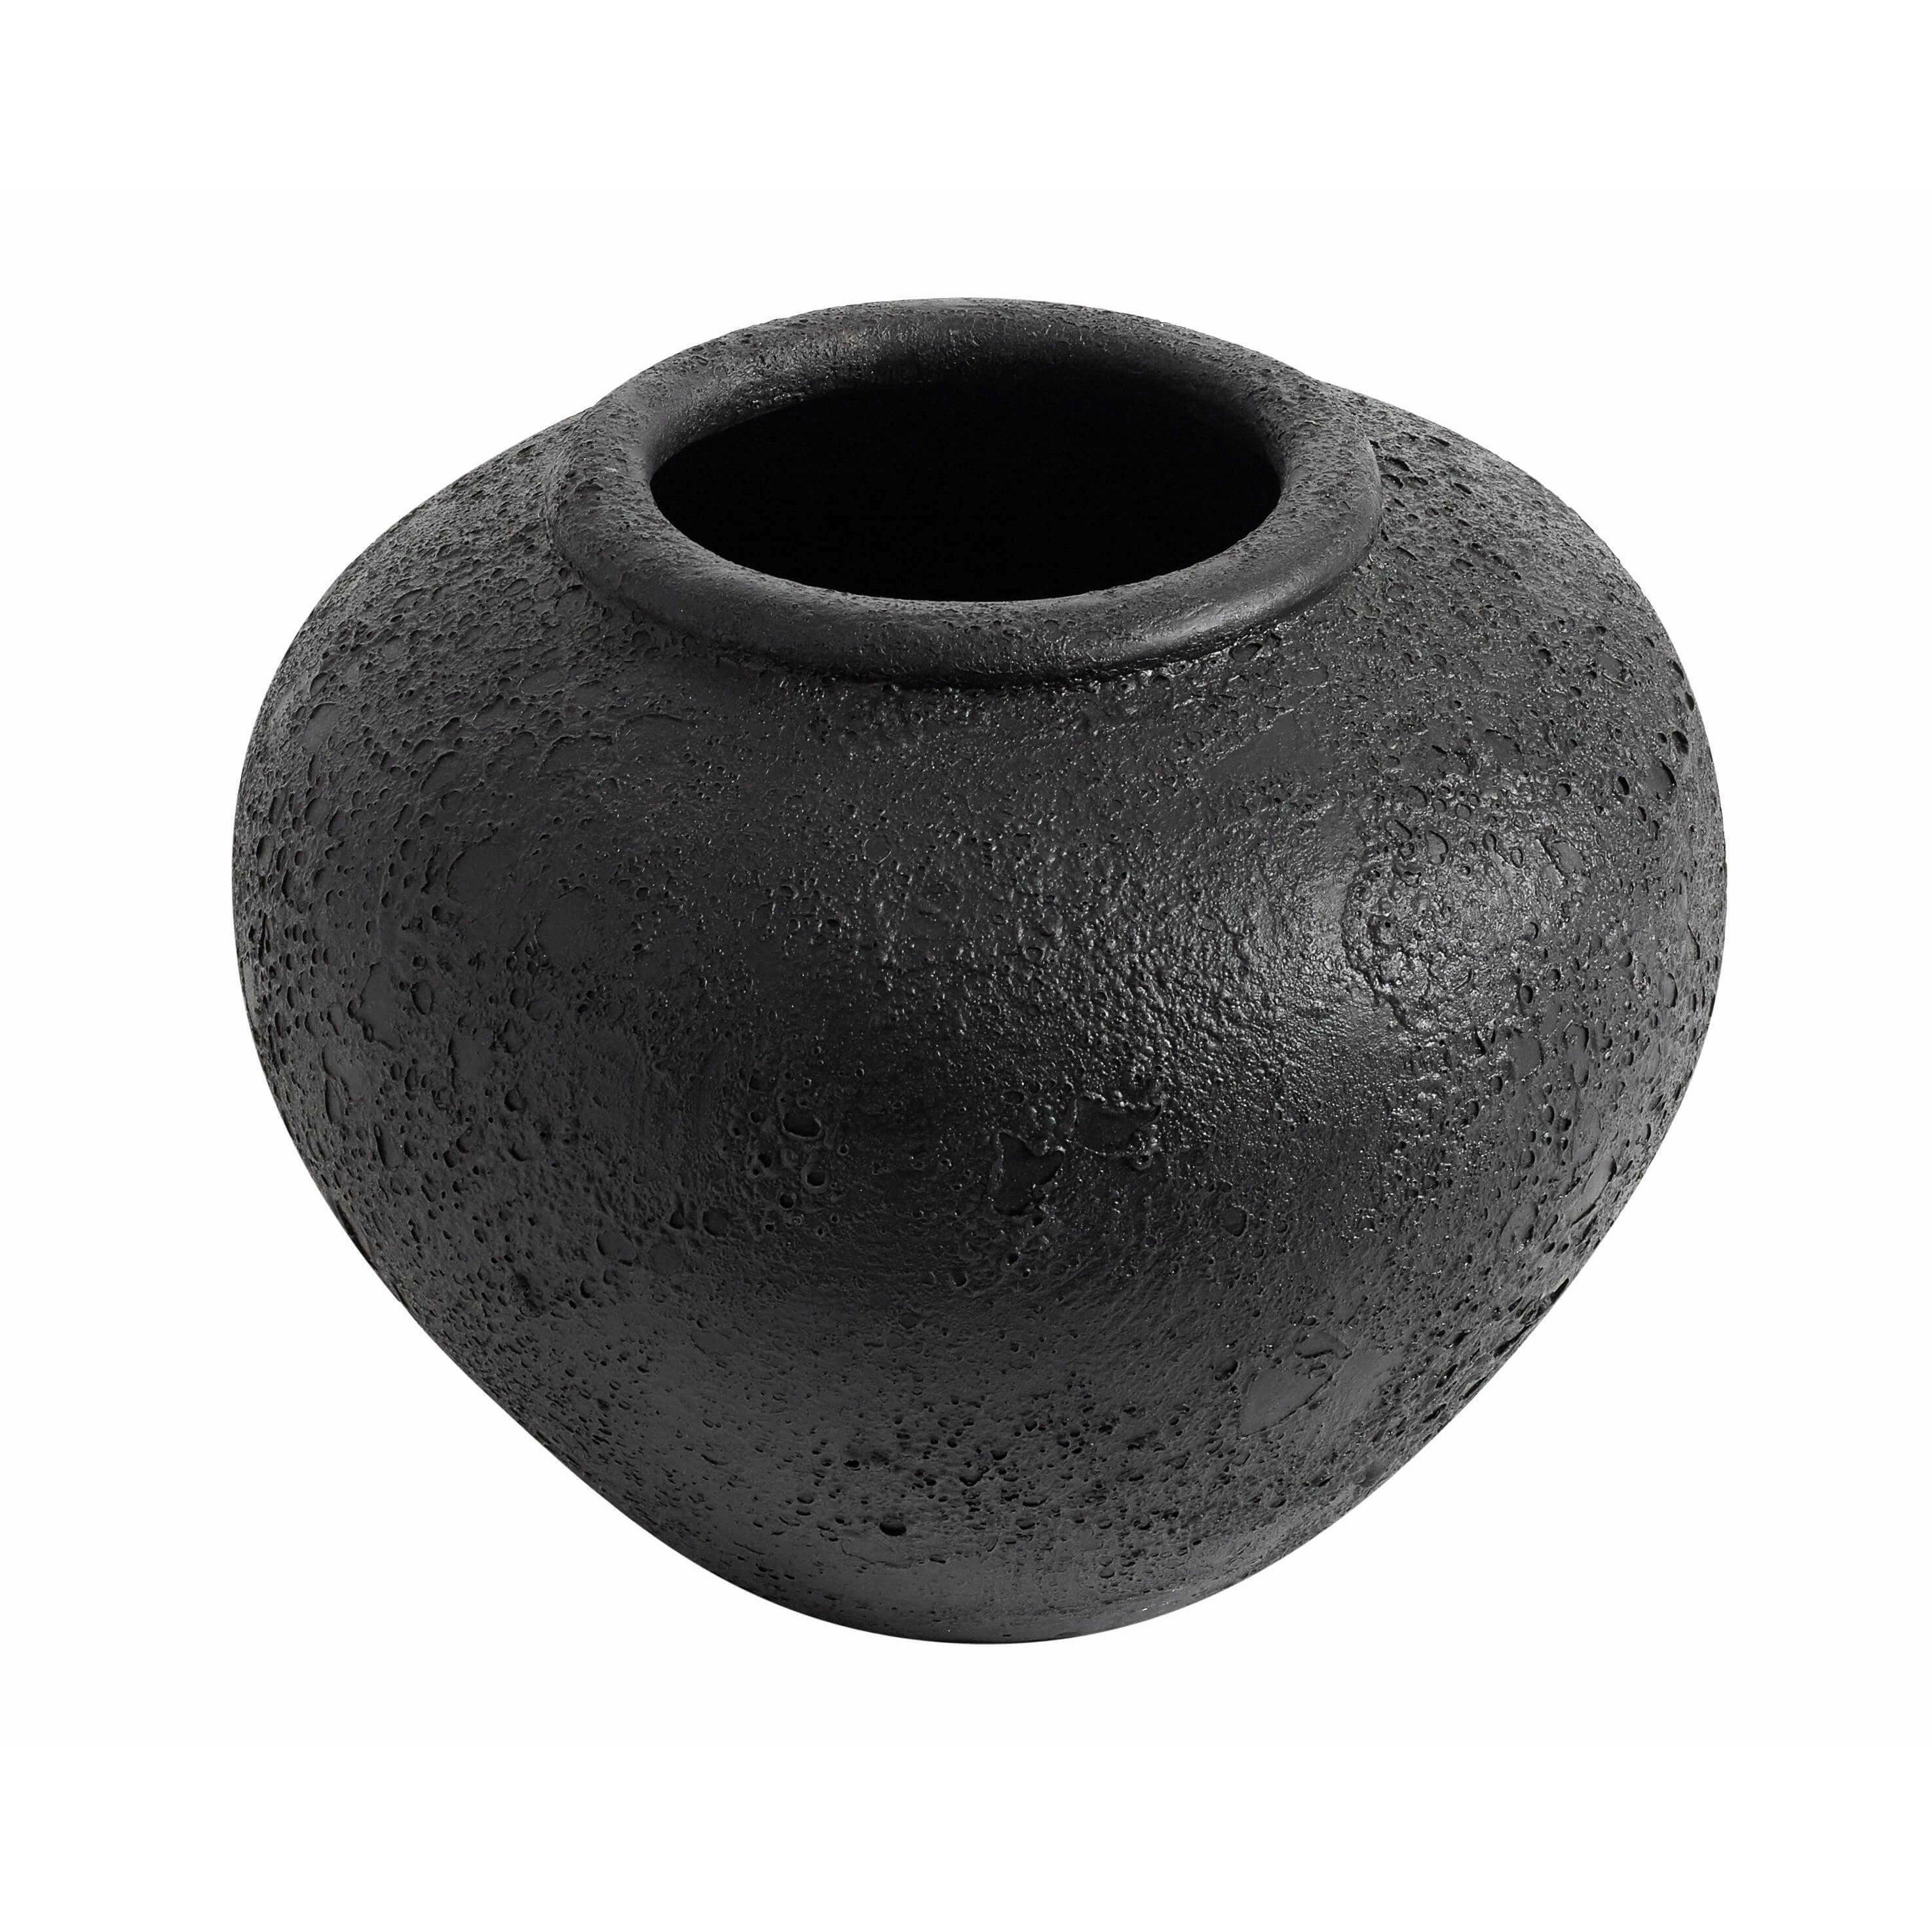 Muubs Luna Jar Black, 26 cm